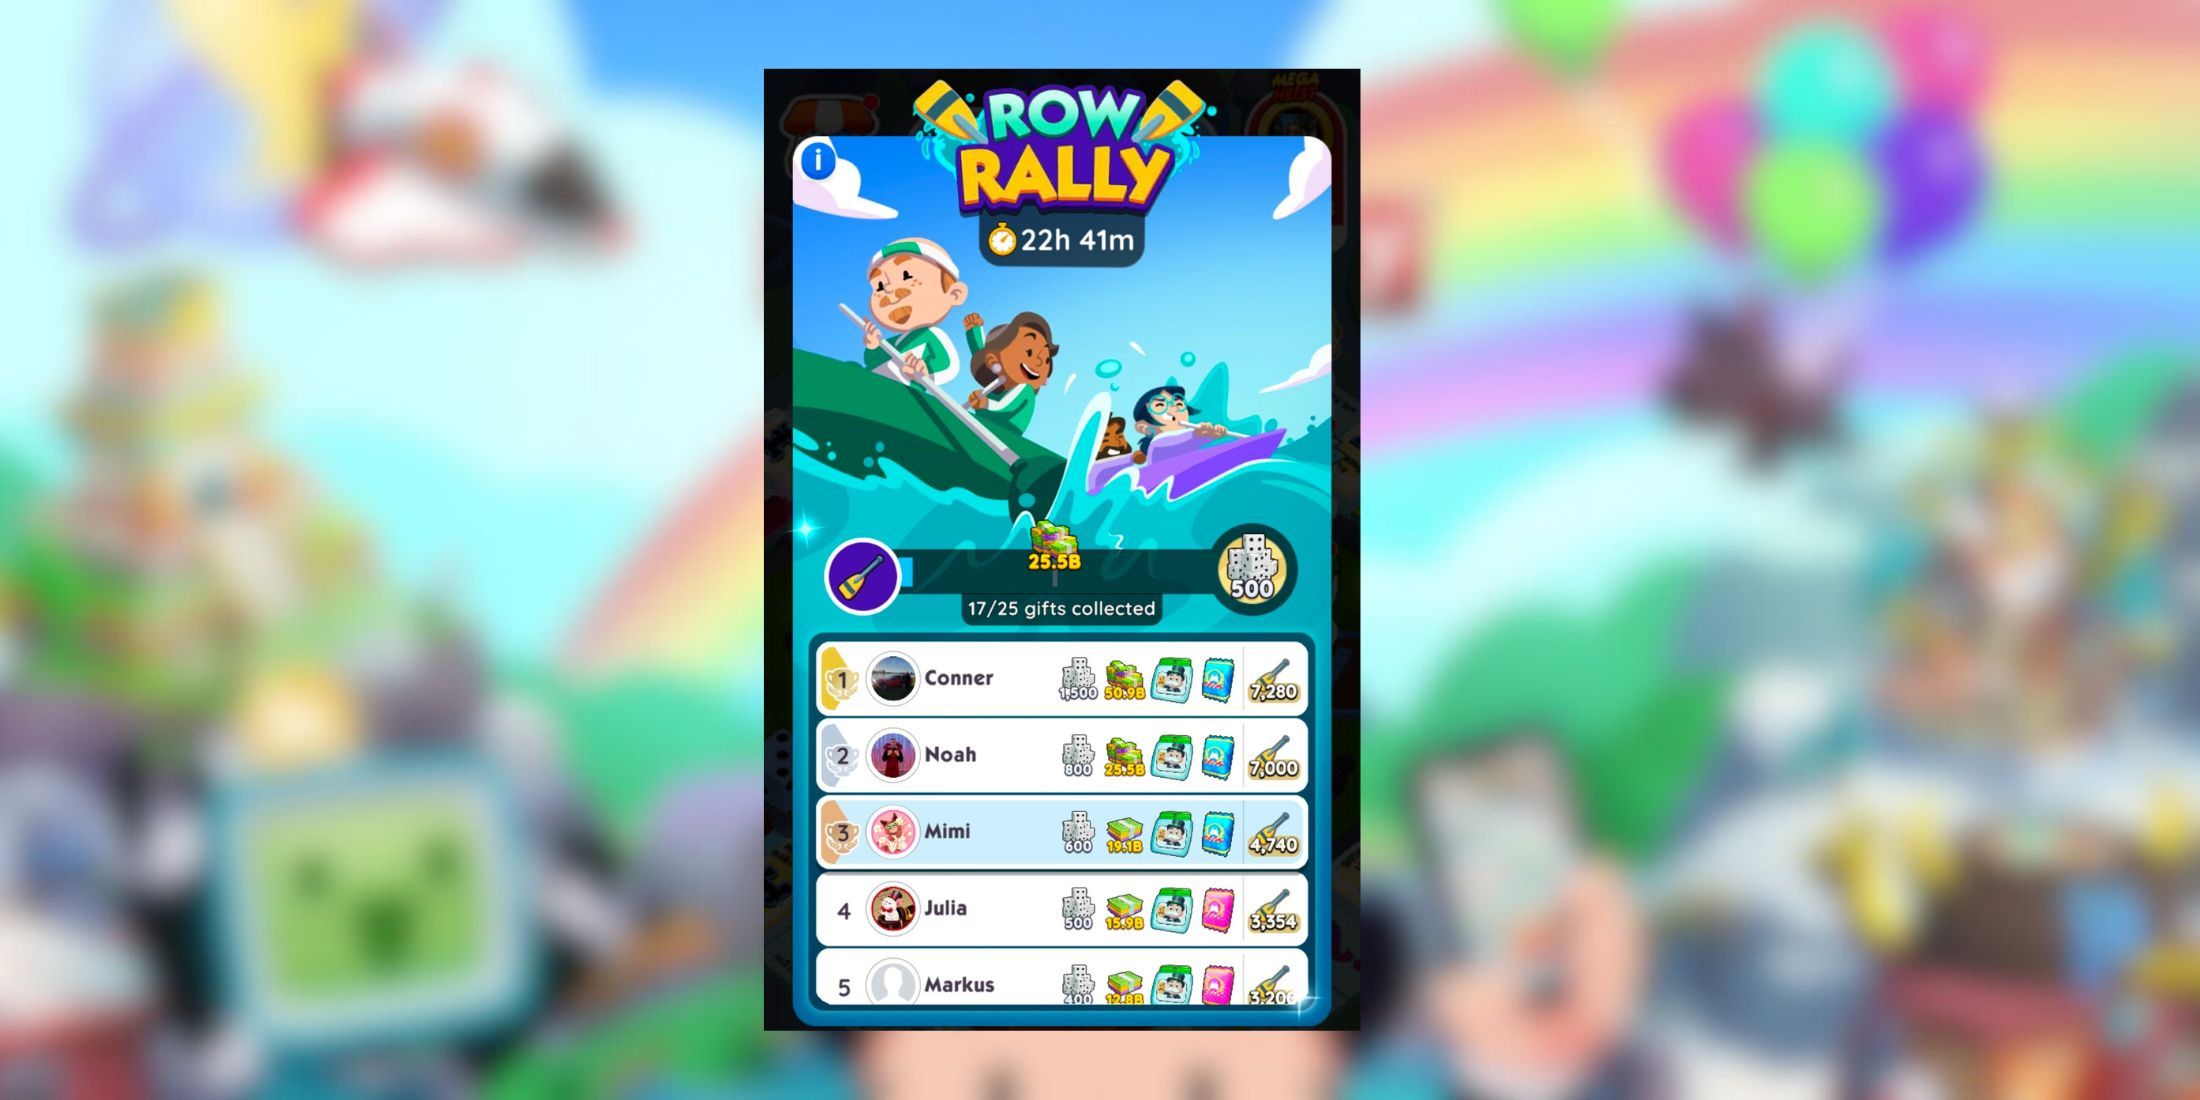 monopoly go row rally rewards